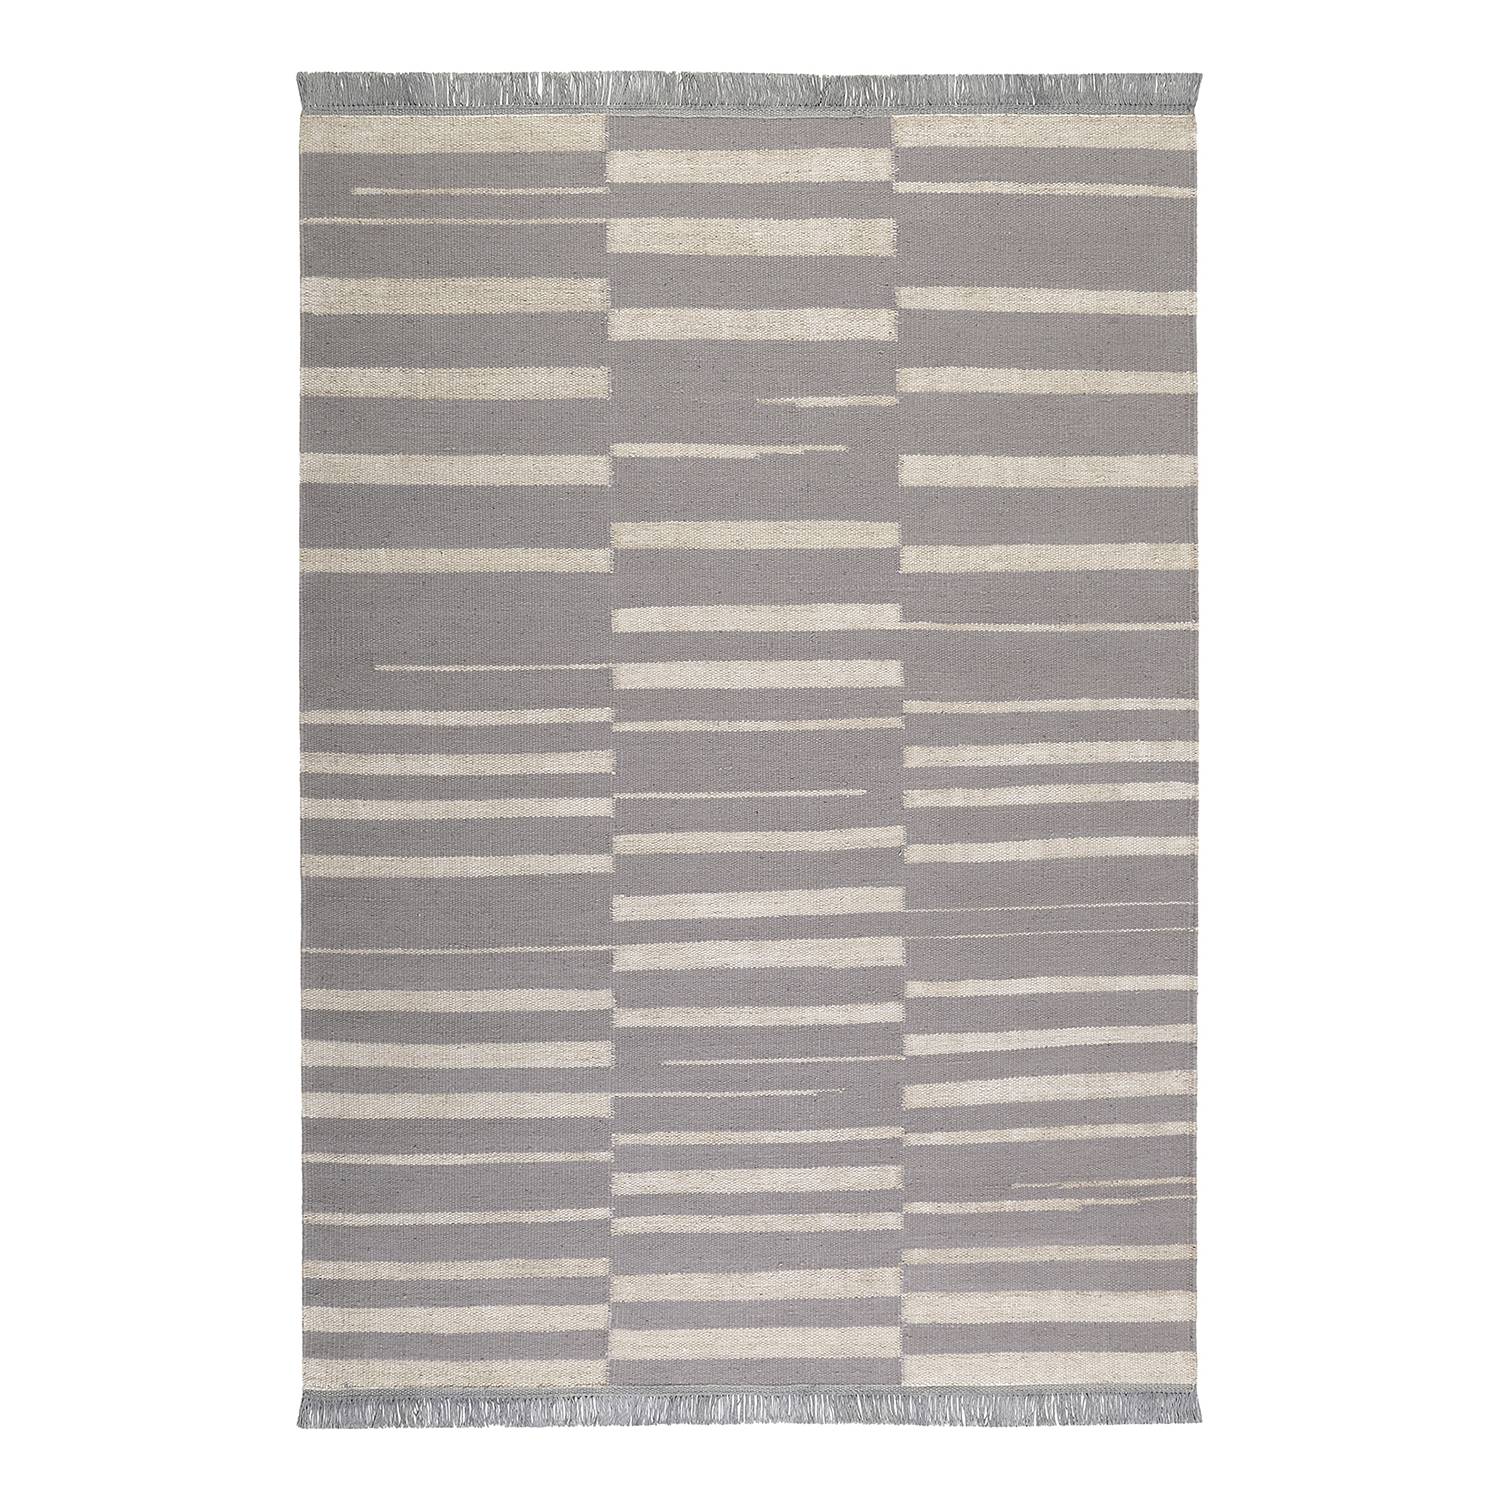 Teppich Skid Marks (handgewebt) - Mischgewebe - Grau / Creme - 160 x 230 cm, carpets&co